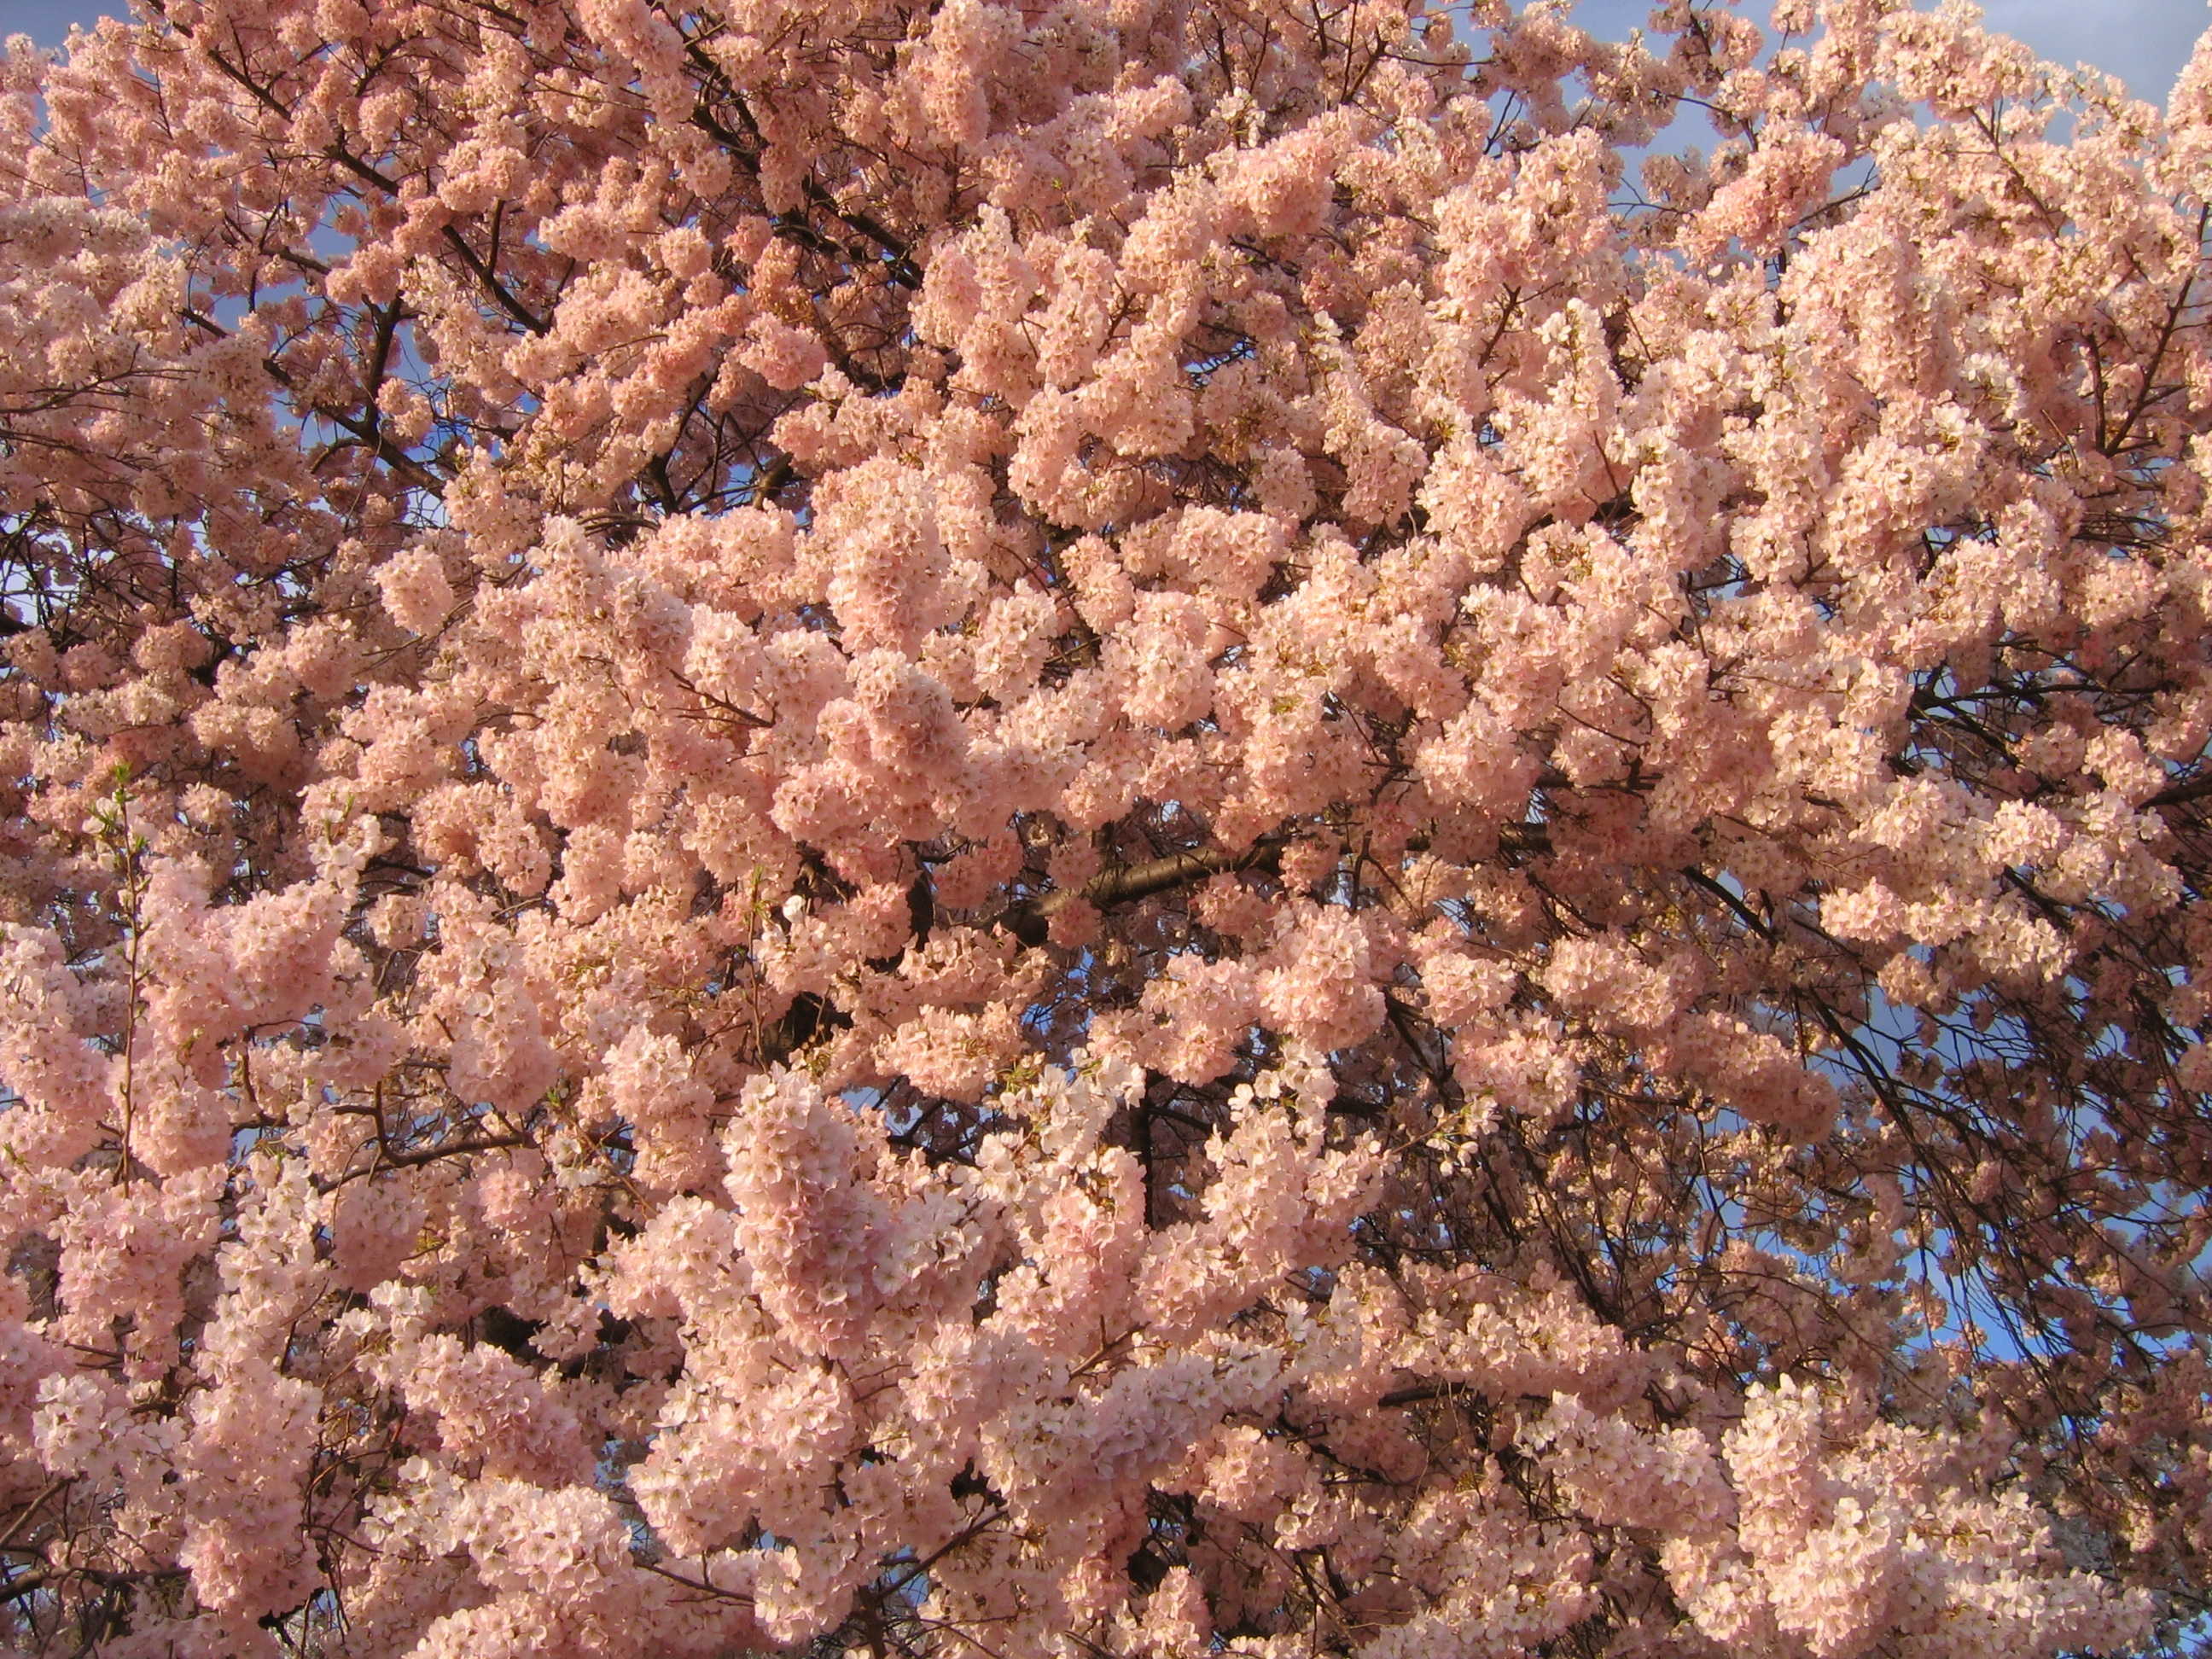 IMG 2388 - Washington DC - Tidal Basin - Cherry Blossoms